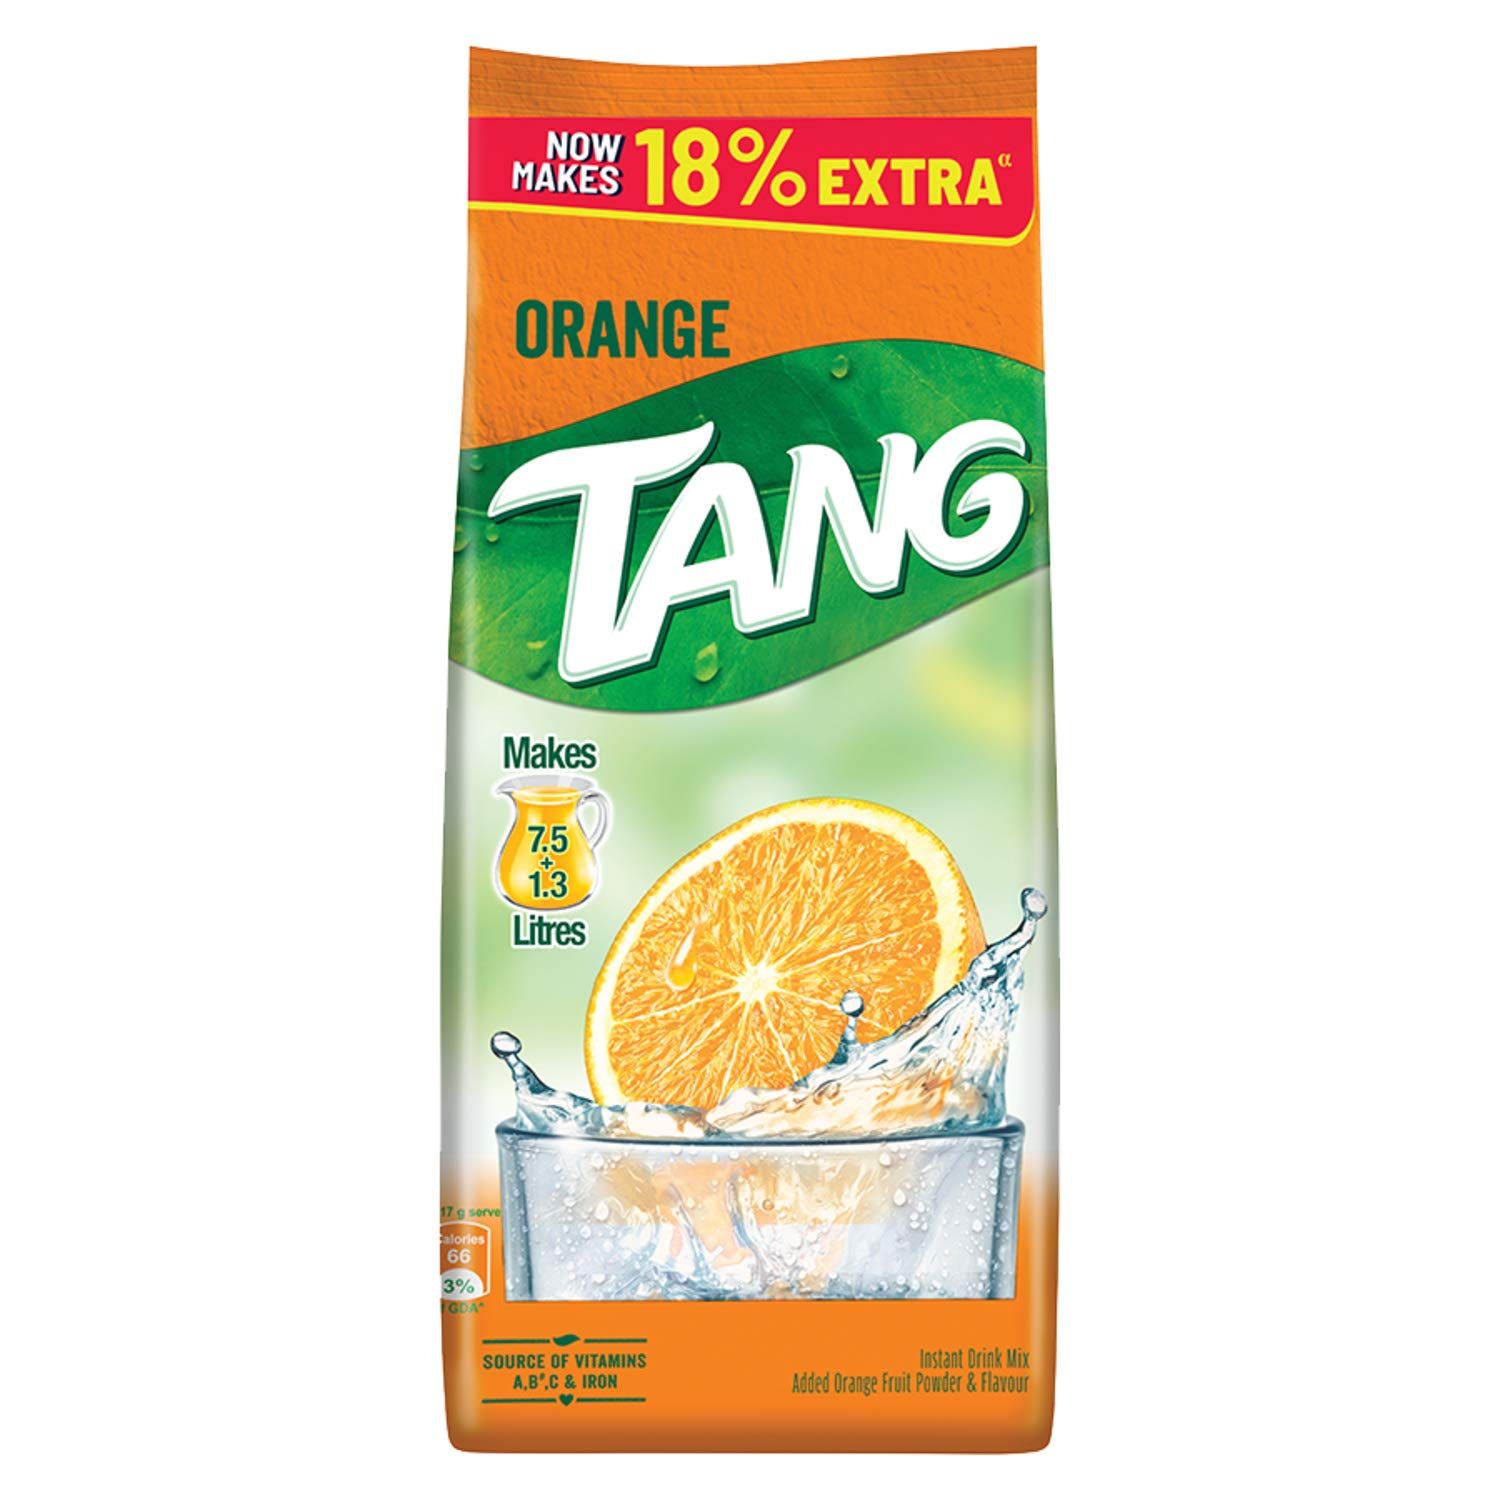 Tang Orange Instant Drink Mix Image